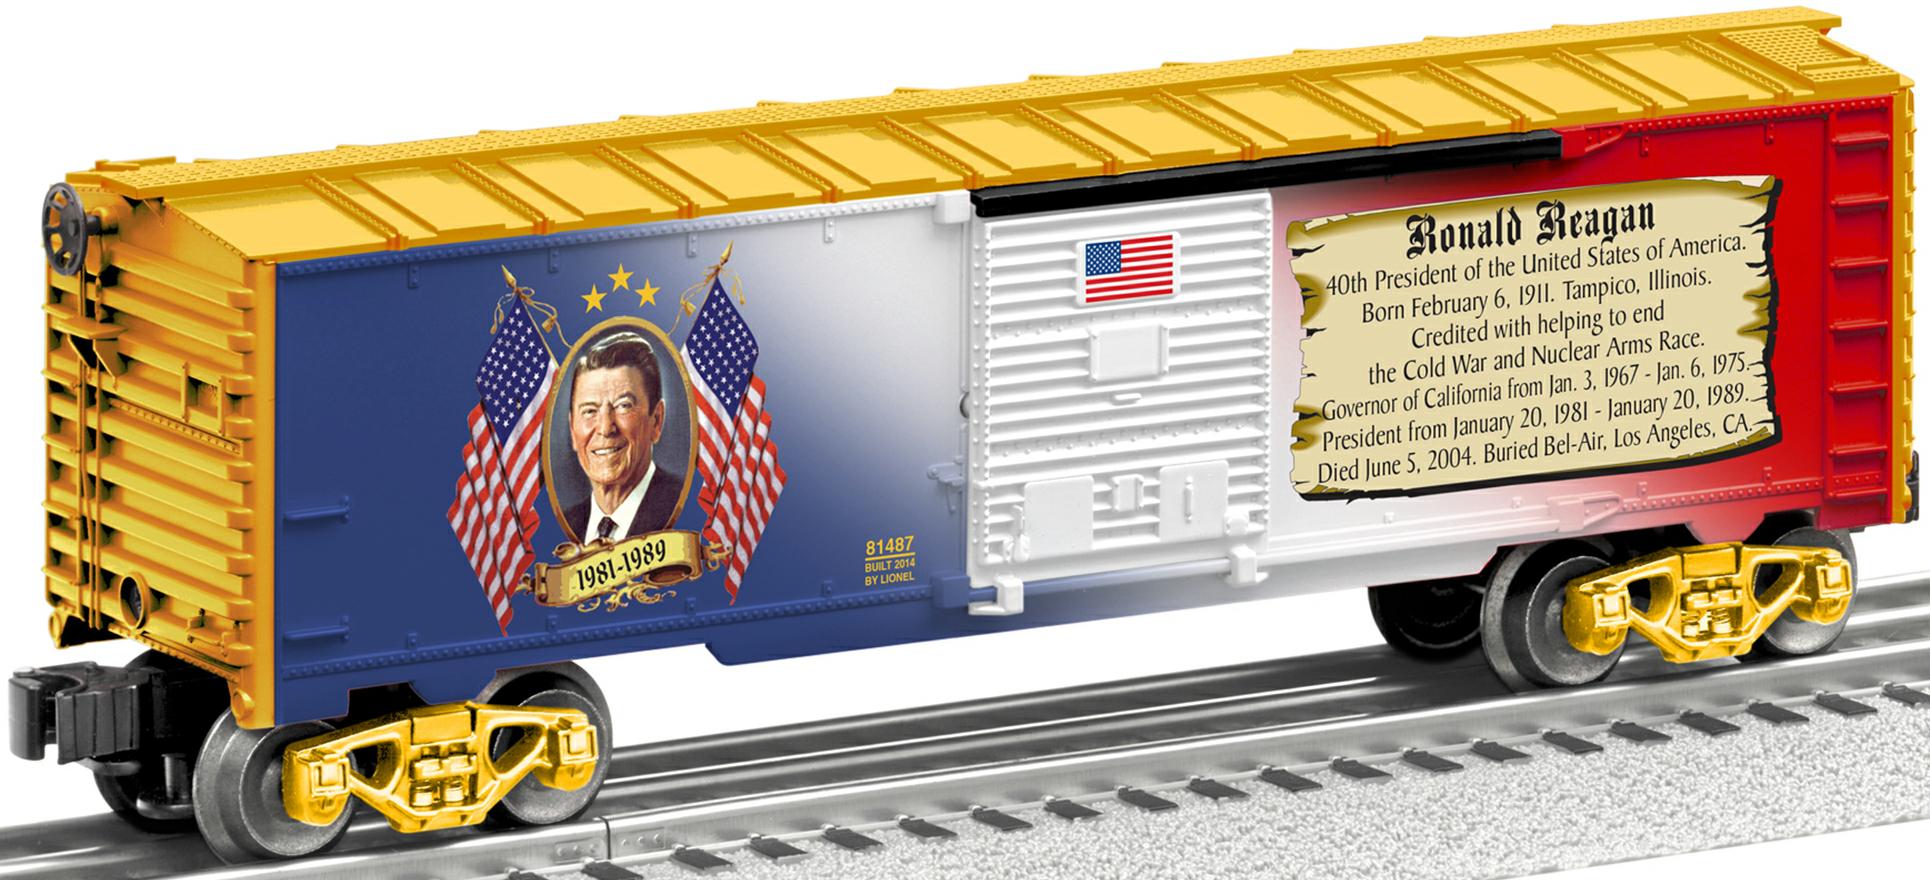 Ronald Reagan boxcar image